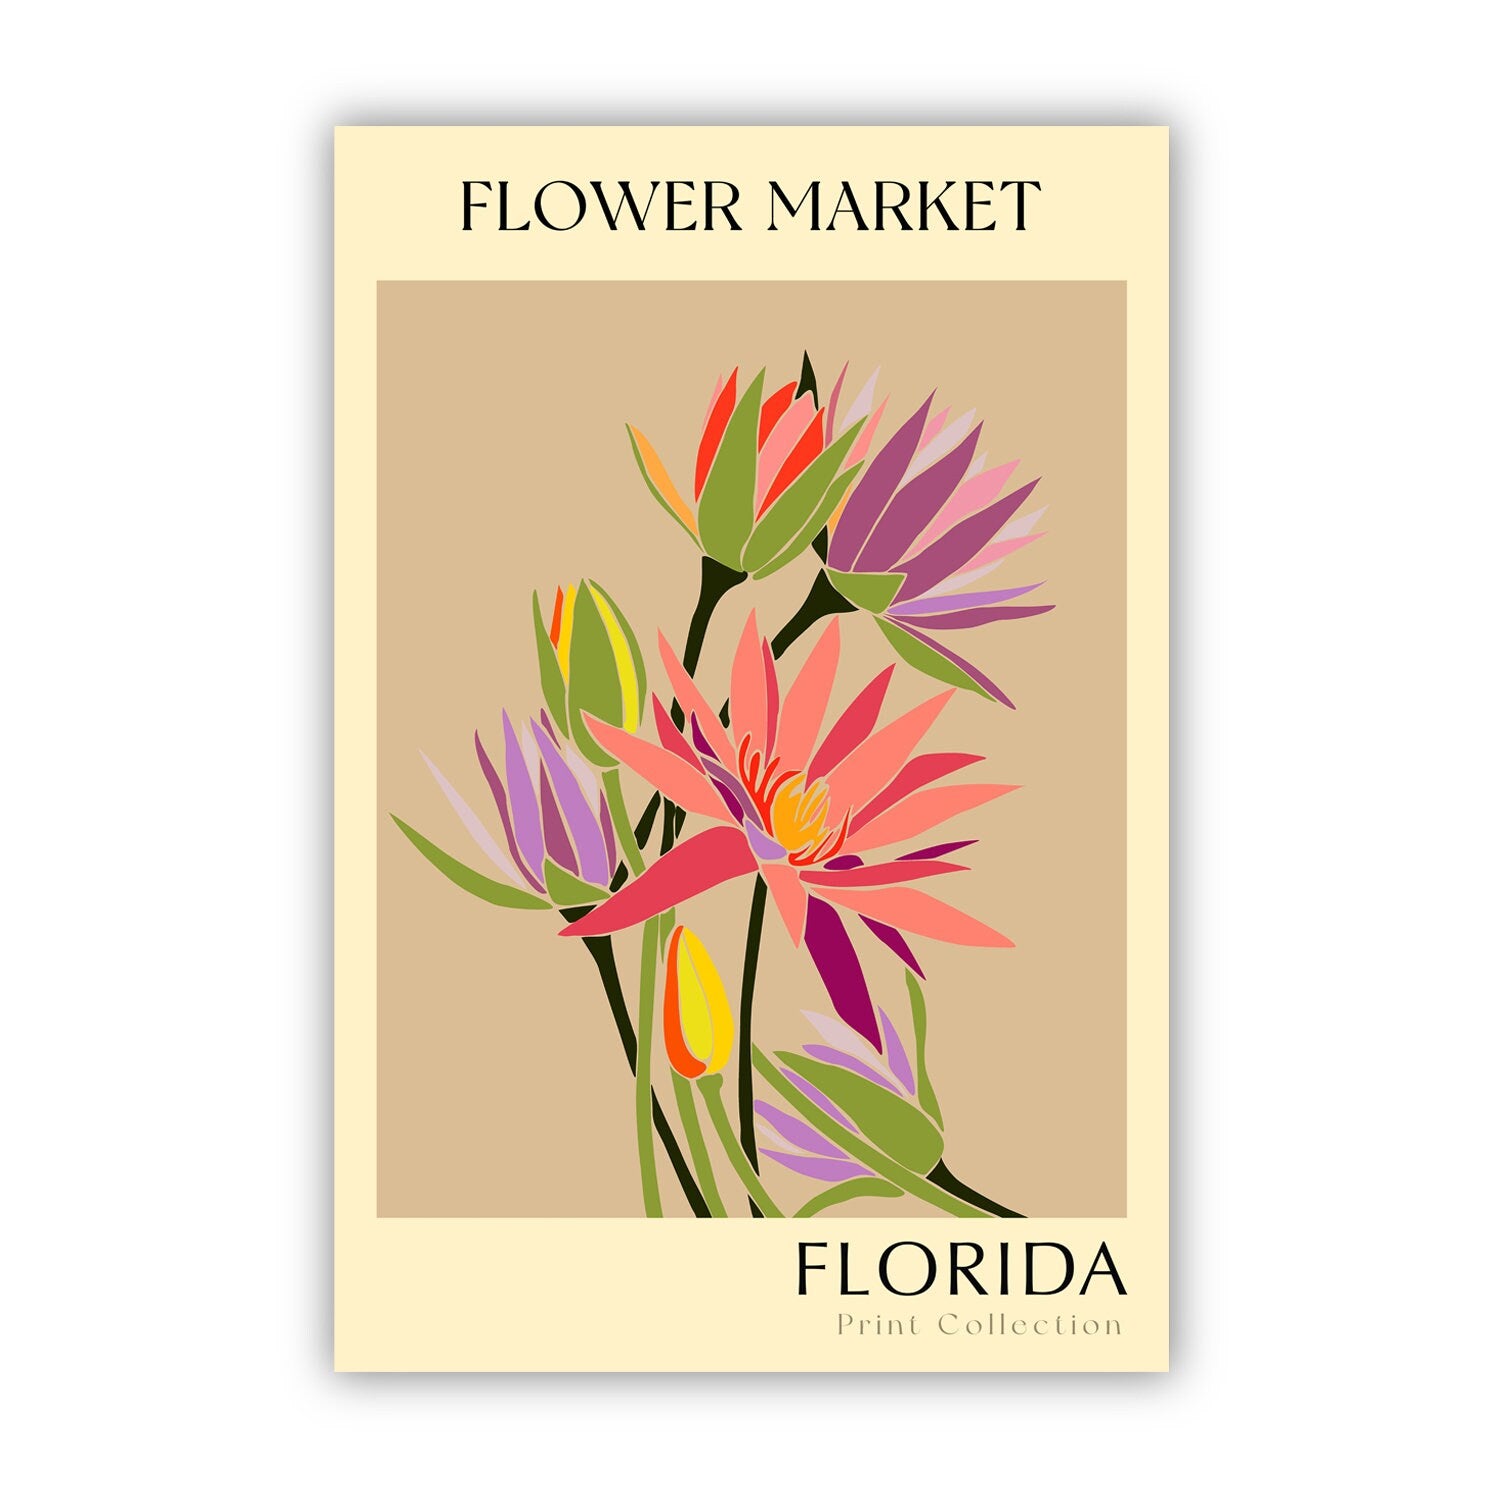 Florida State flower print, USA states poster, Florida flower market poster, Botanical posters, Nature poster artwork, Boho floral wall art